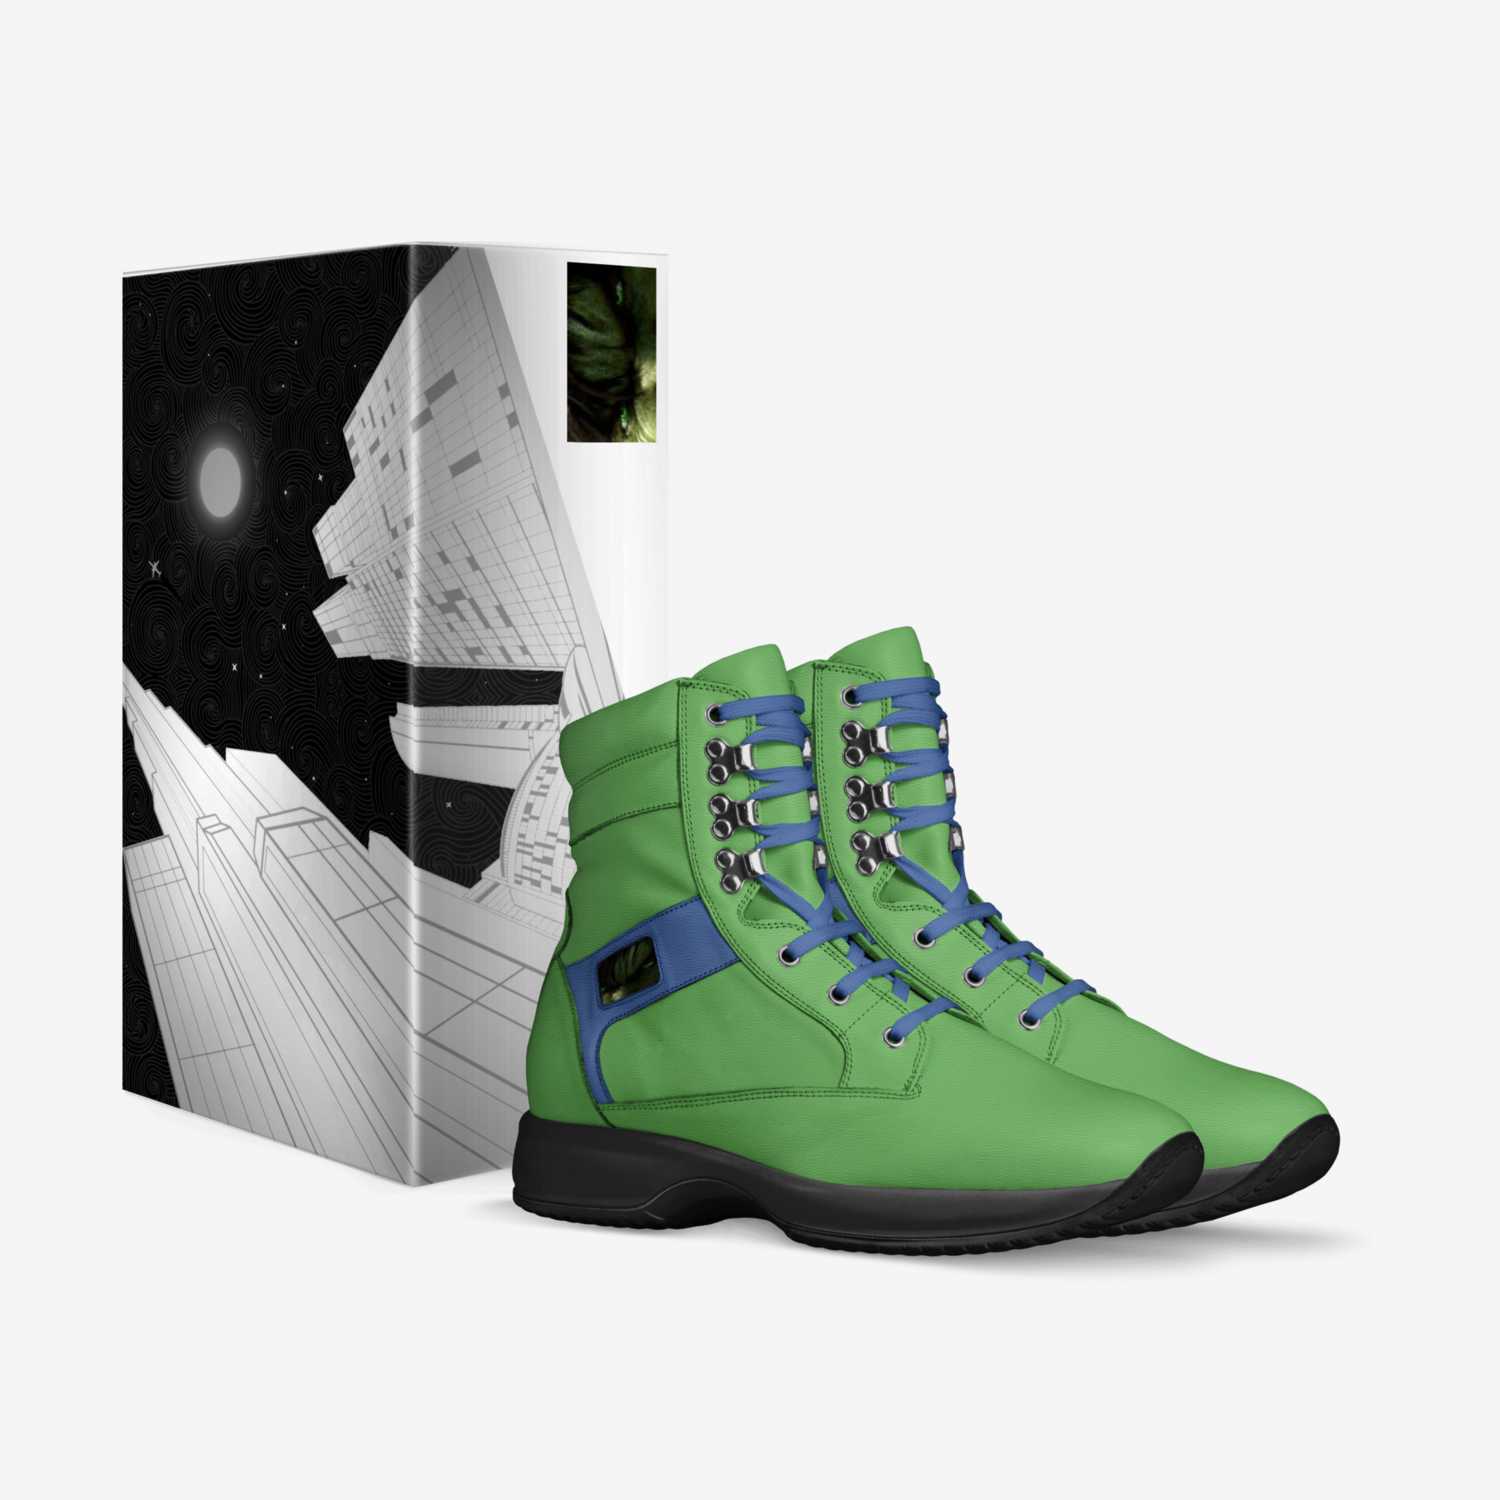 DA HULK custom made in Italy shoes by Rondio Murphy | Box view